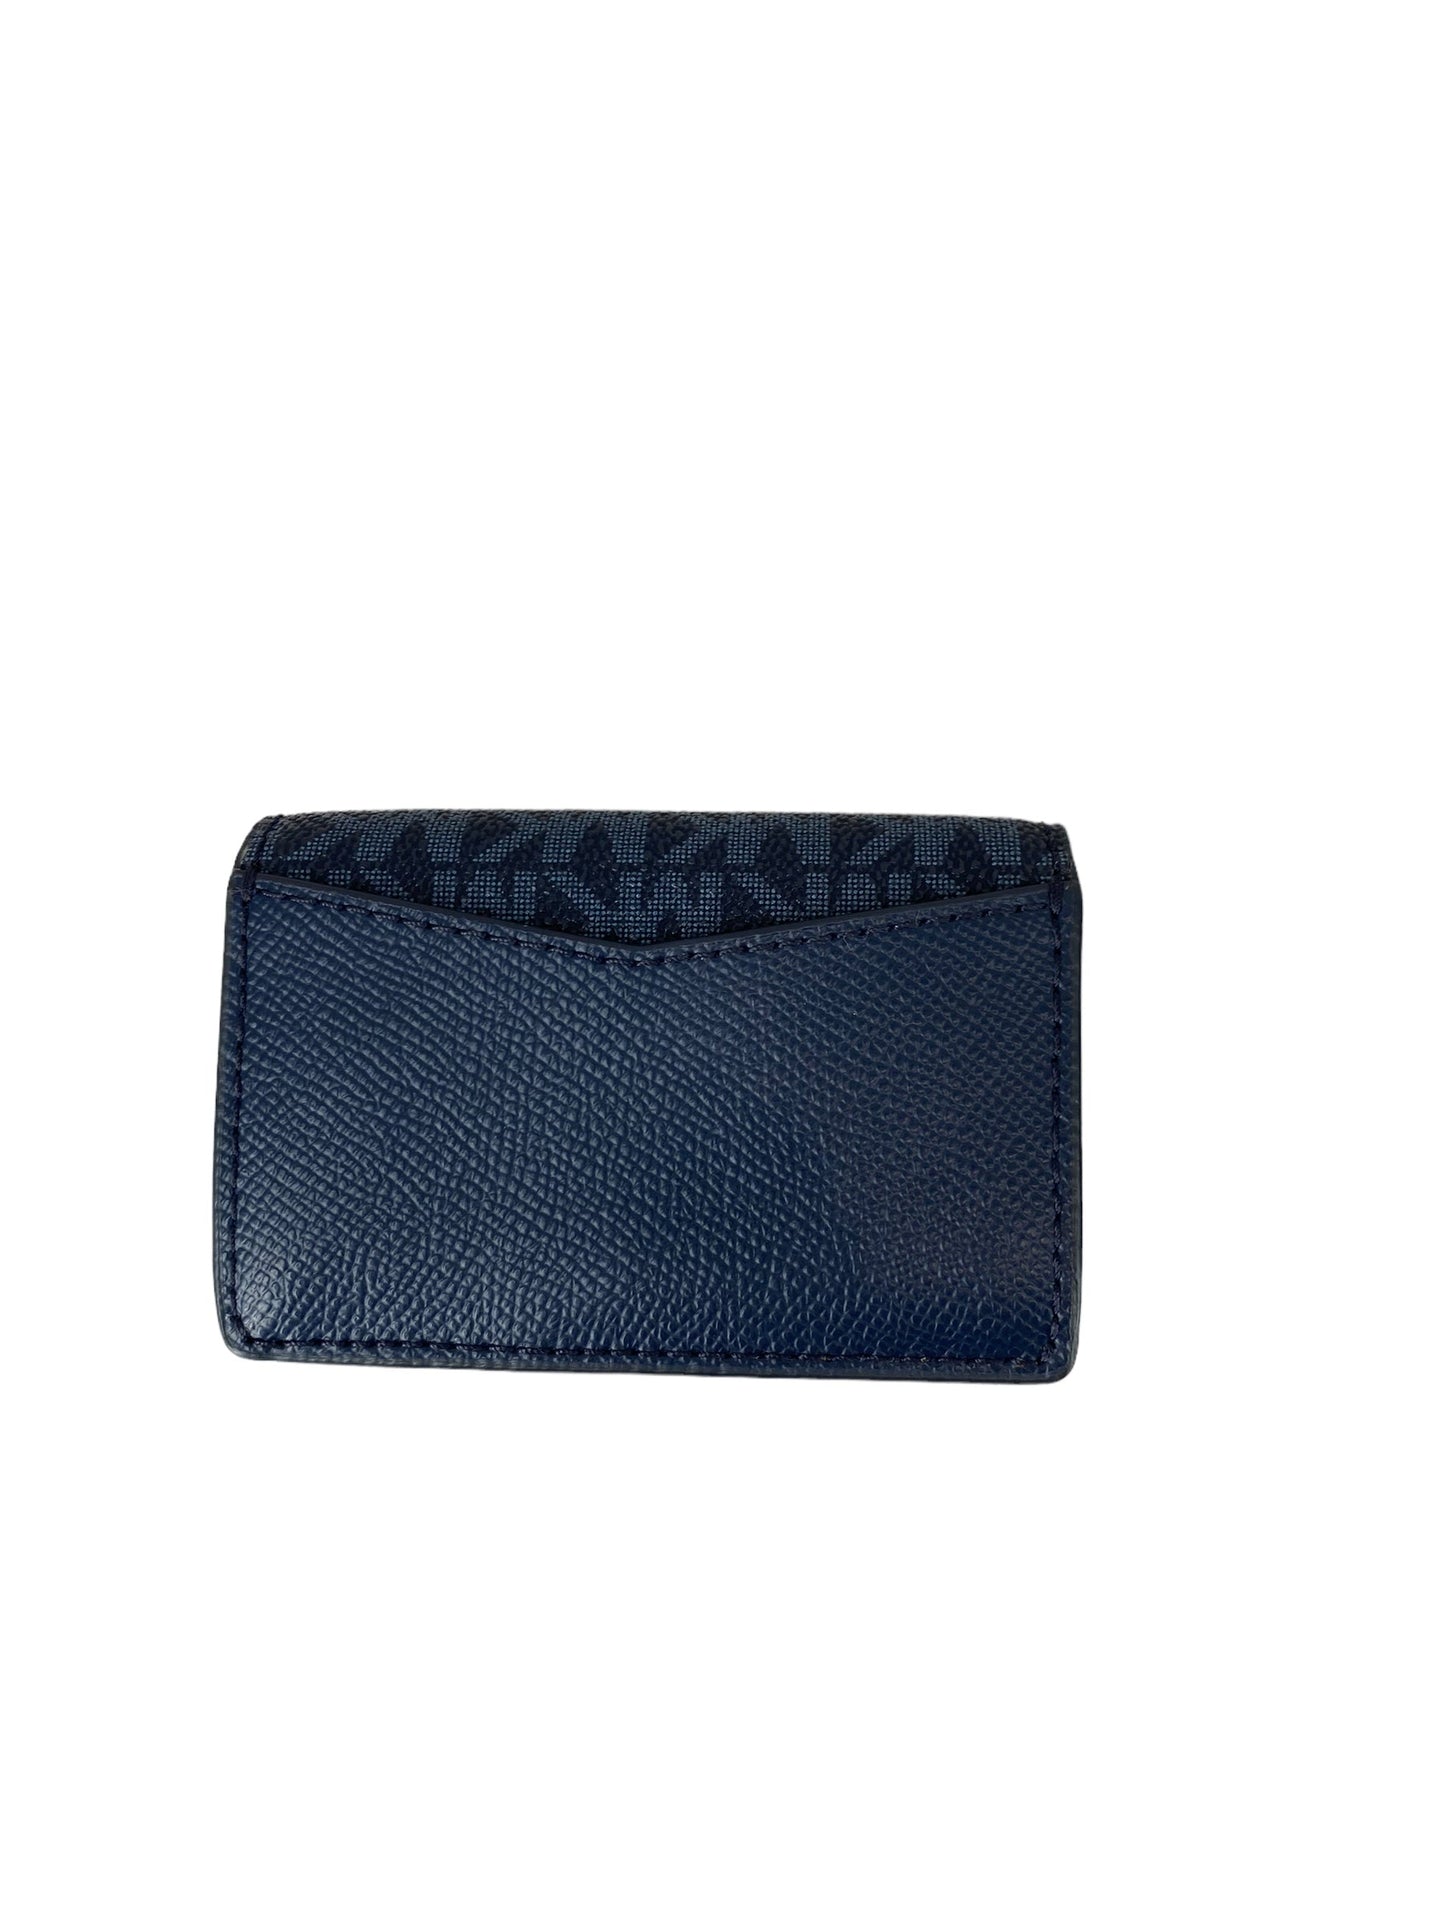 Blue Wallet Michael Kors, Size Small